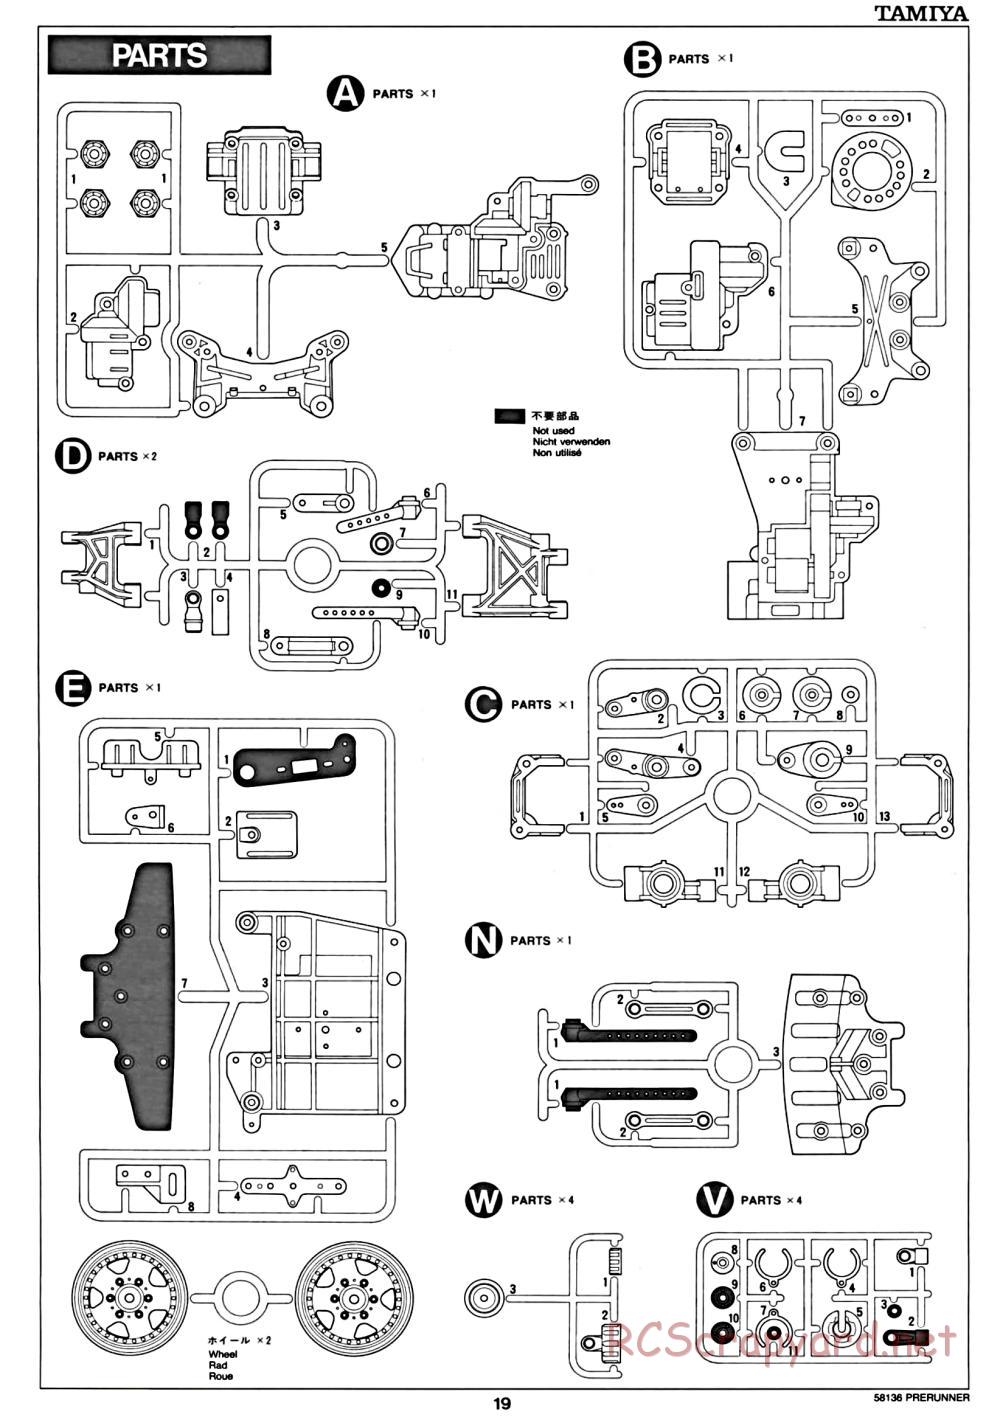 Tamiya - Toyota Prerunner Chassis - Manual - Page 19